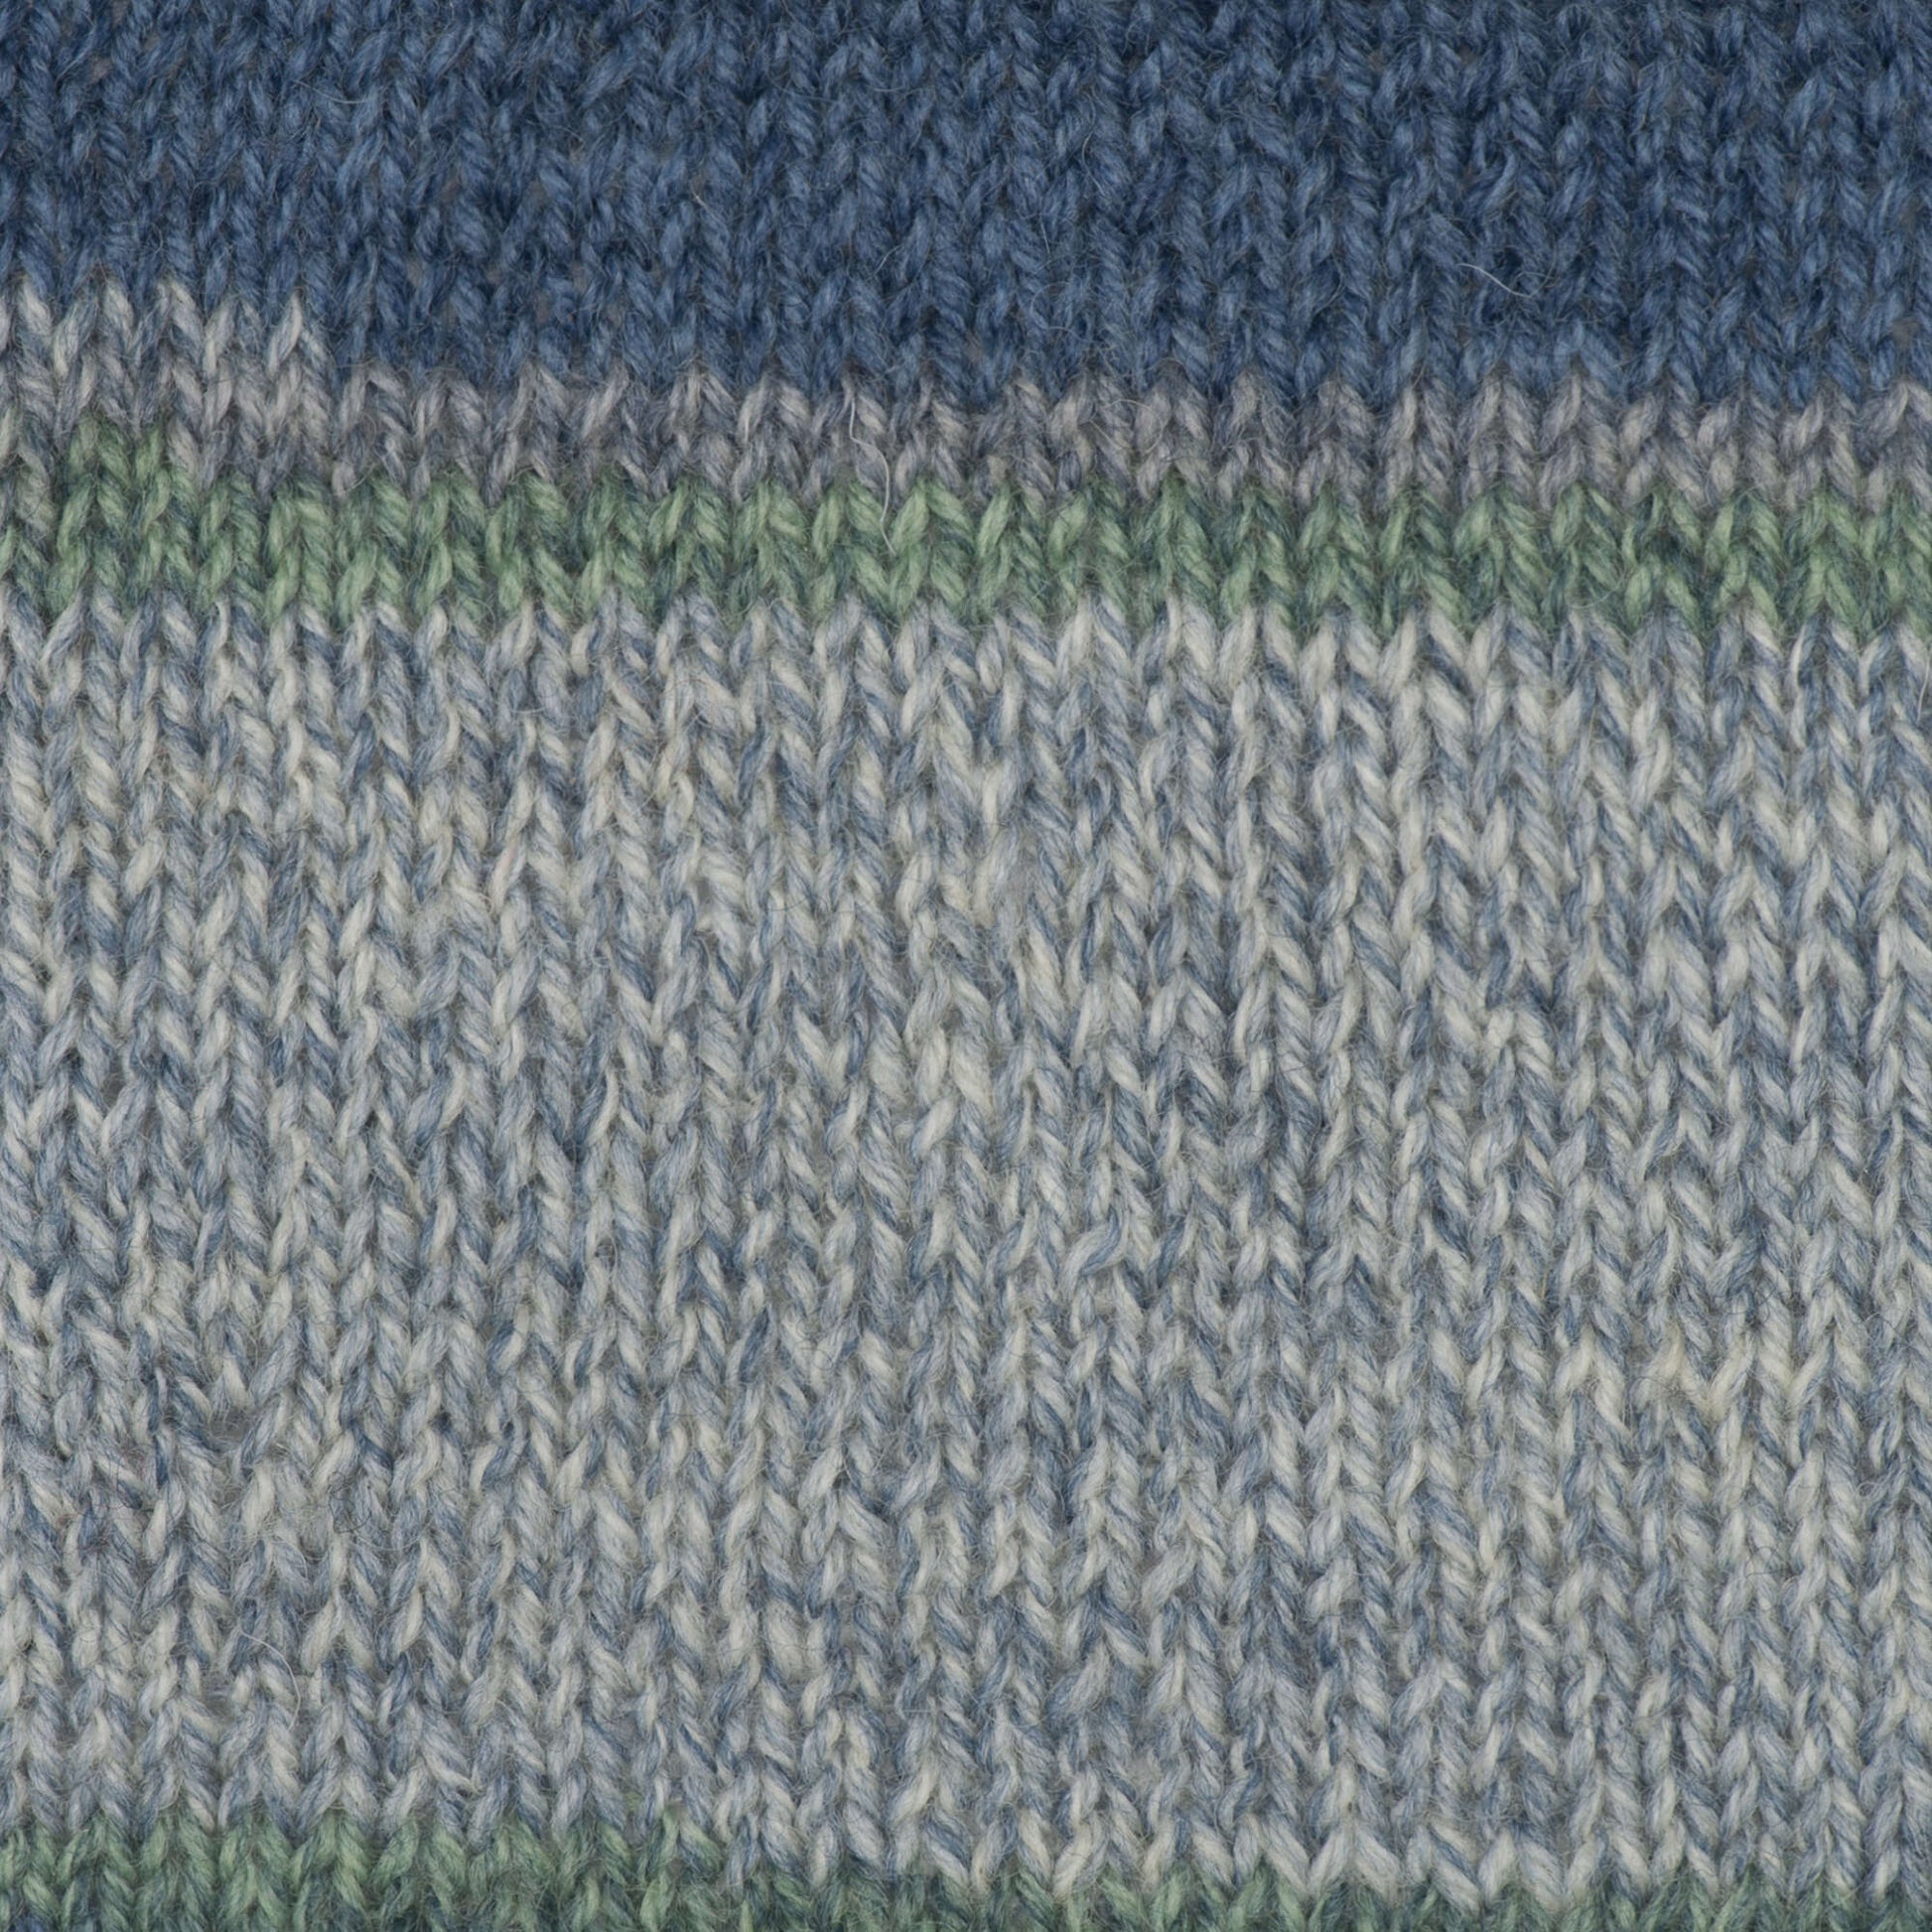 Patons Kroy Socks Yarn - Discontinued Shades Green Striped Ragg